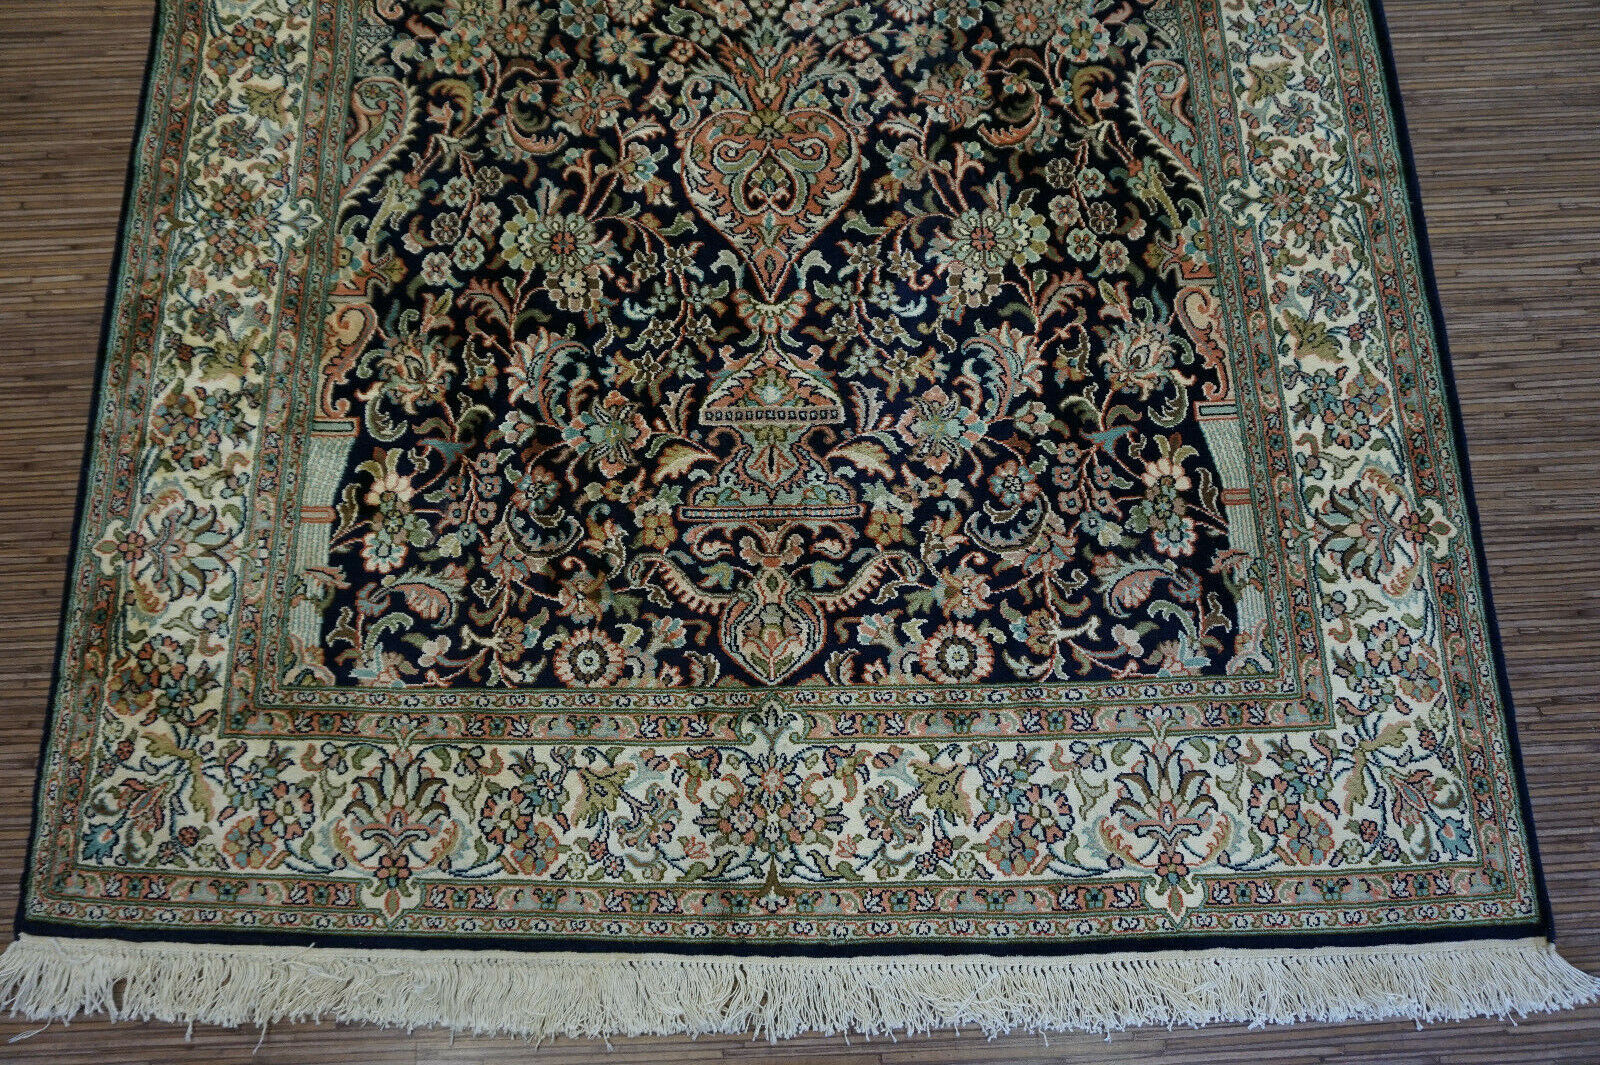 Side view of the Handmade Vintage Persian Kashmir Rug demonstrating its Kashmir artificial silk material